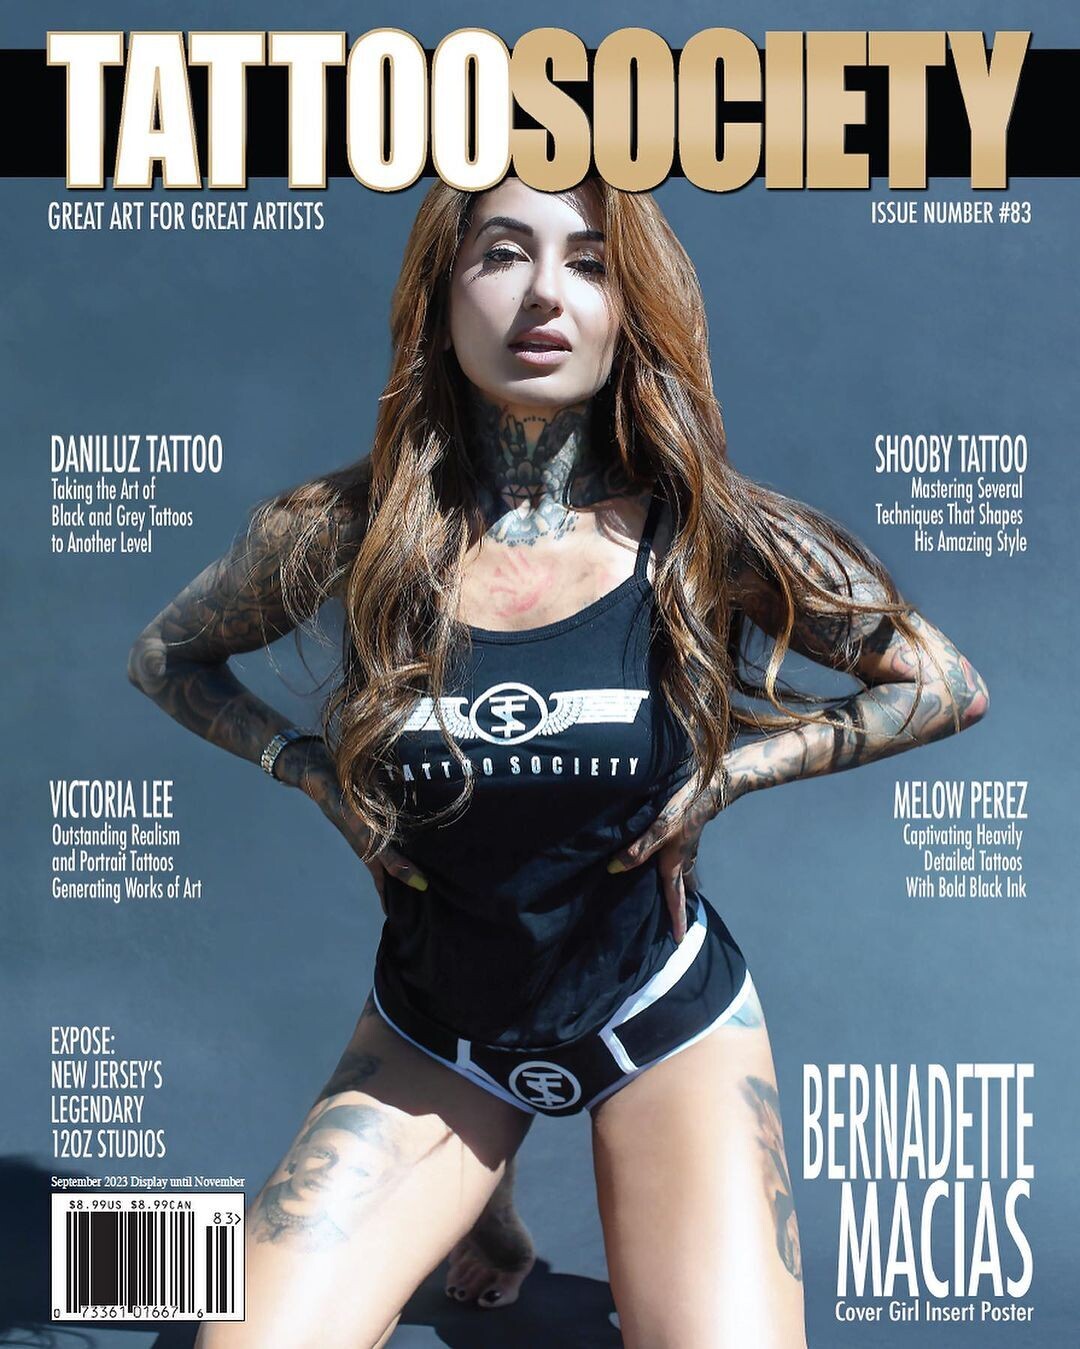 Tattoo Society Magazine Issue 83 - Bernadette Macias